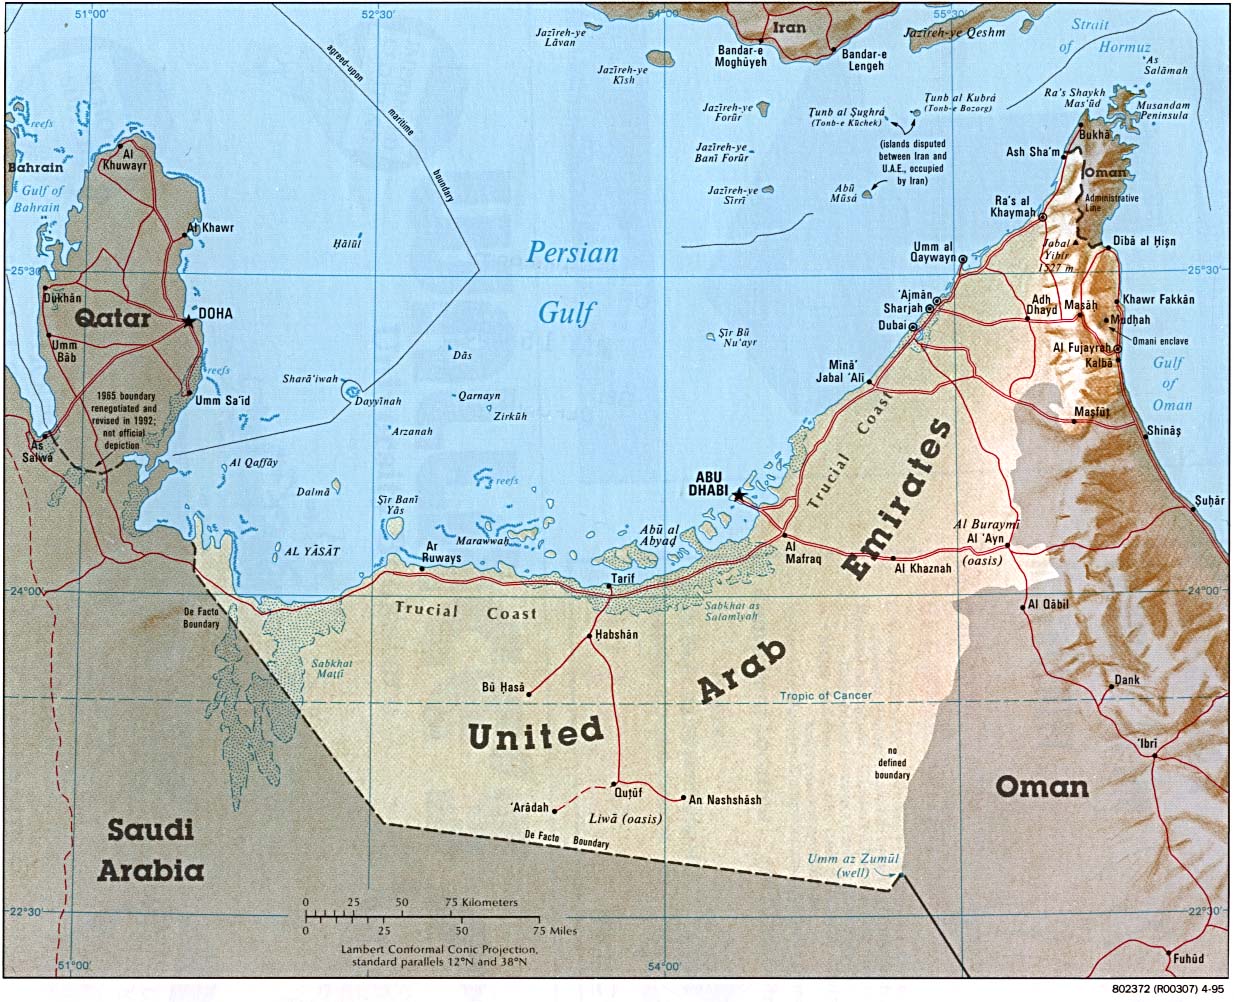 united arab emirates Khor Fakkan map